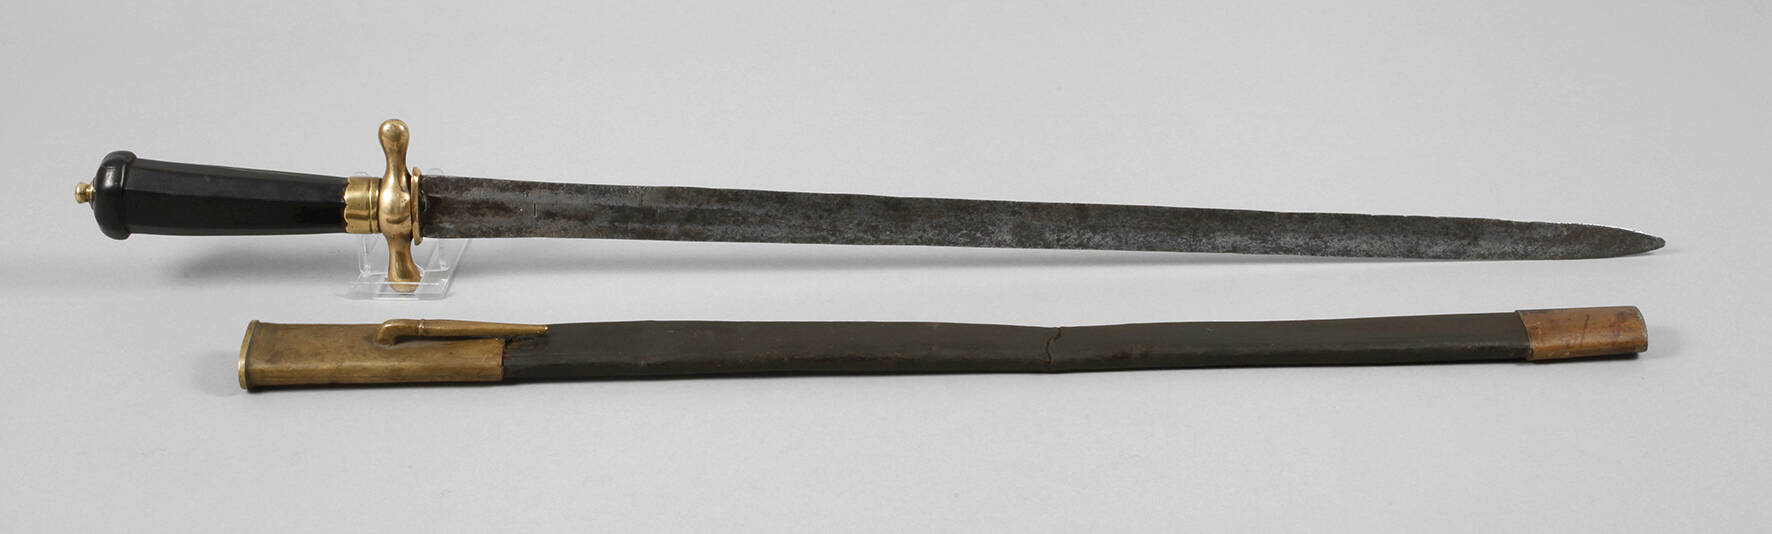 Schwertklinge datiert 1414